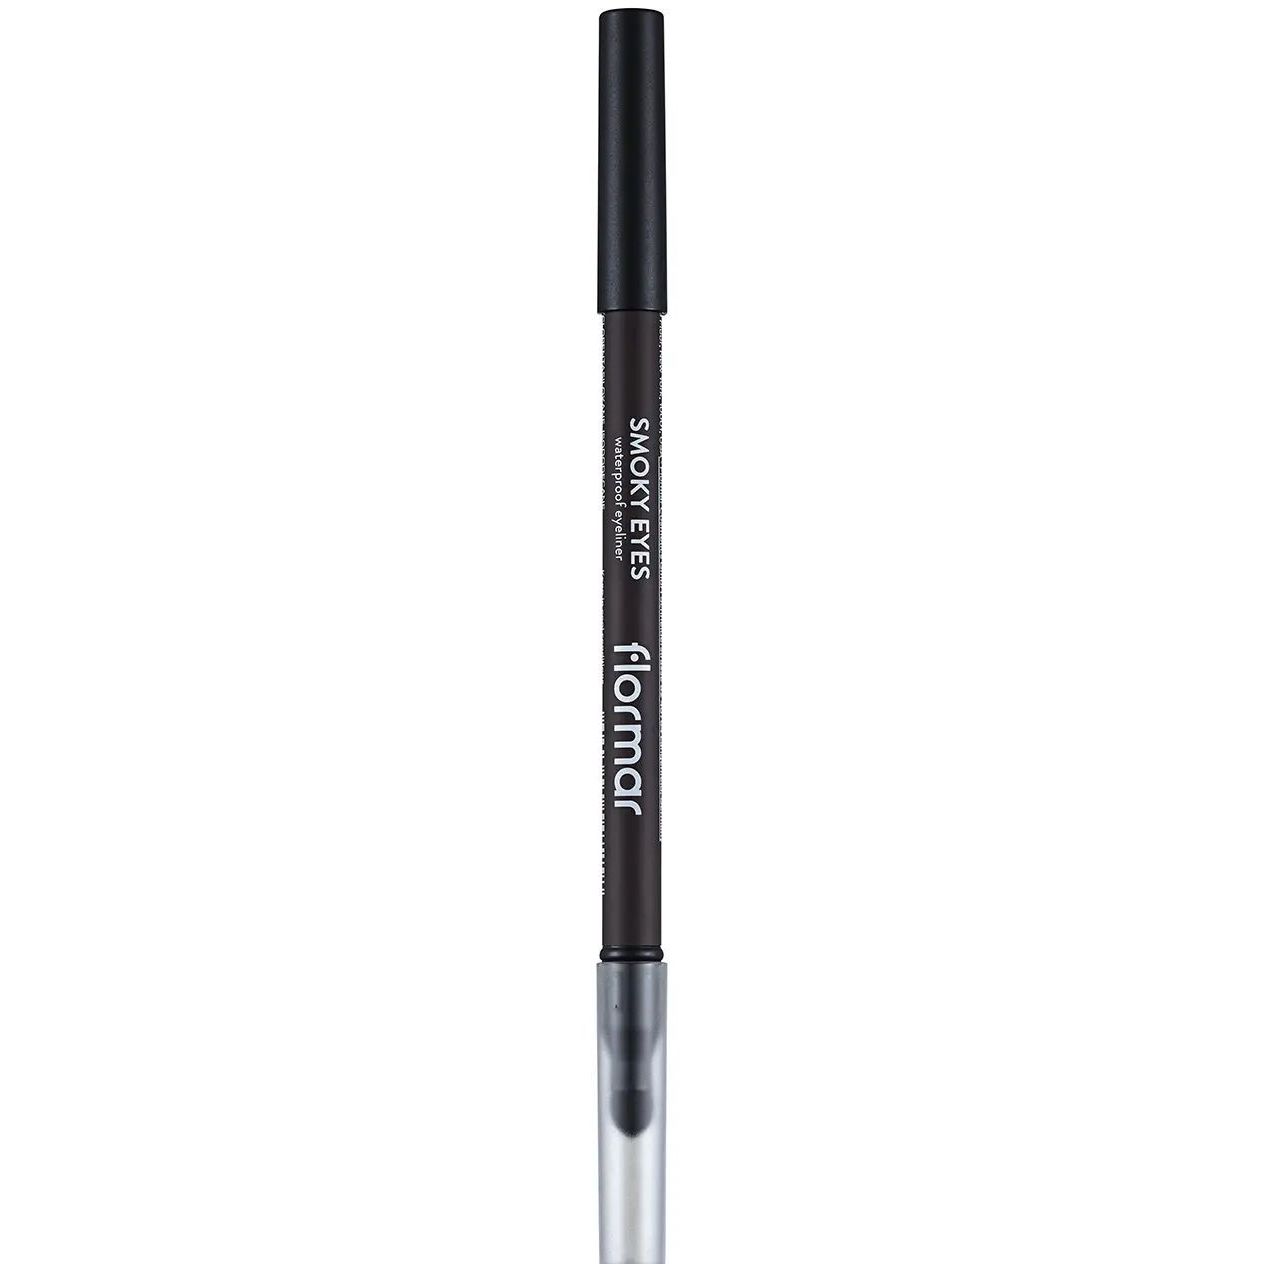 Олівець для очей Flormar Smoky Eye відтінок 002 (Coolest Brown) 1.14 г - фото 3